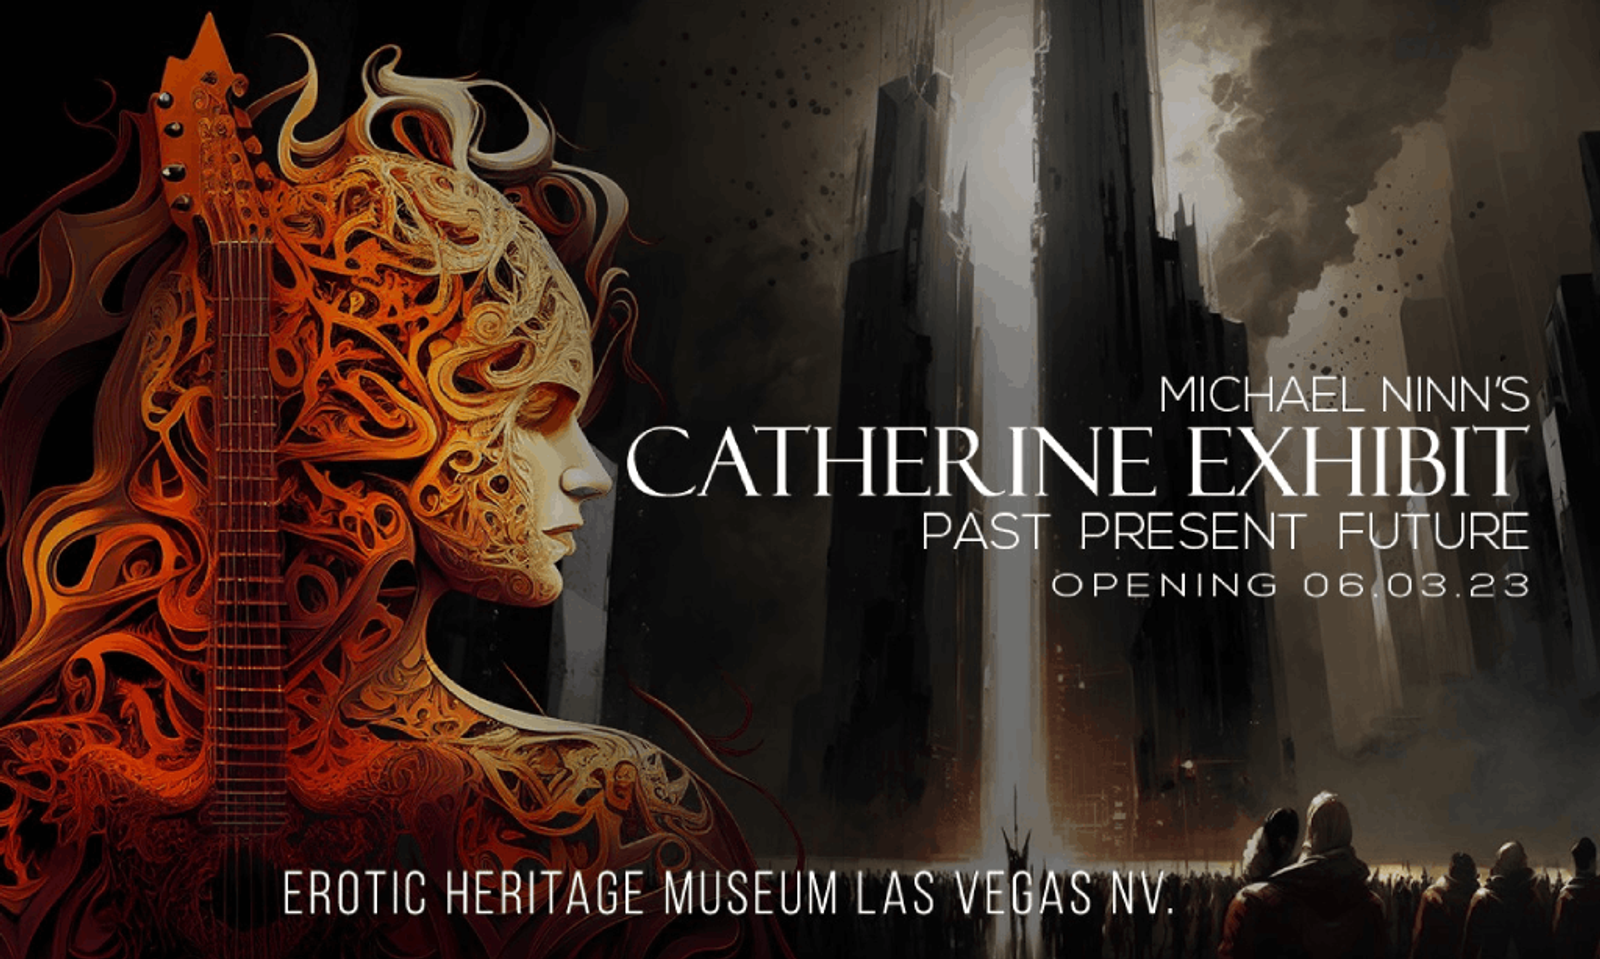 The Erotic Heritage Museum to Host Immersive Michael Ninn Exhibit